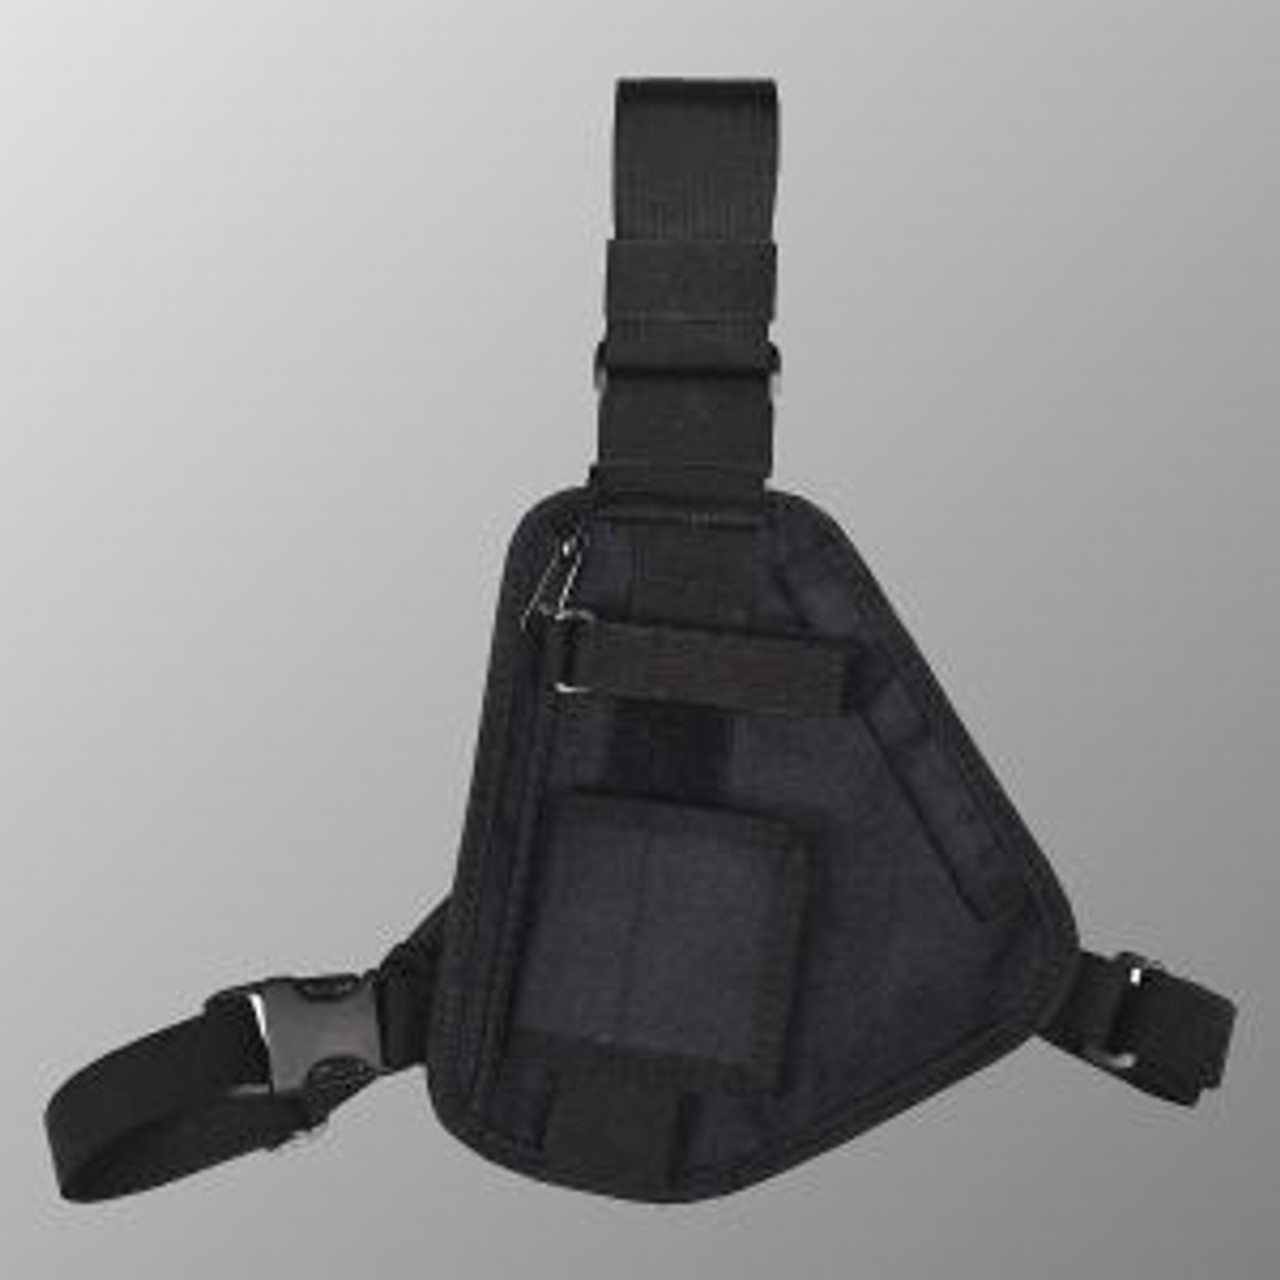 Vertex Standard VX-200 3-Point Chest Harness - Black